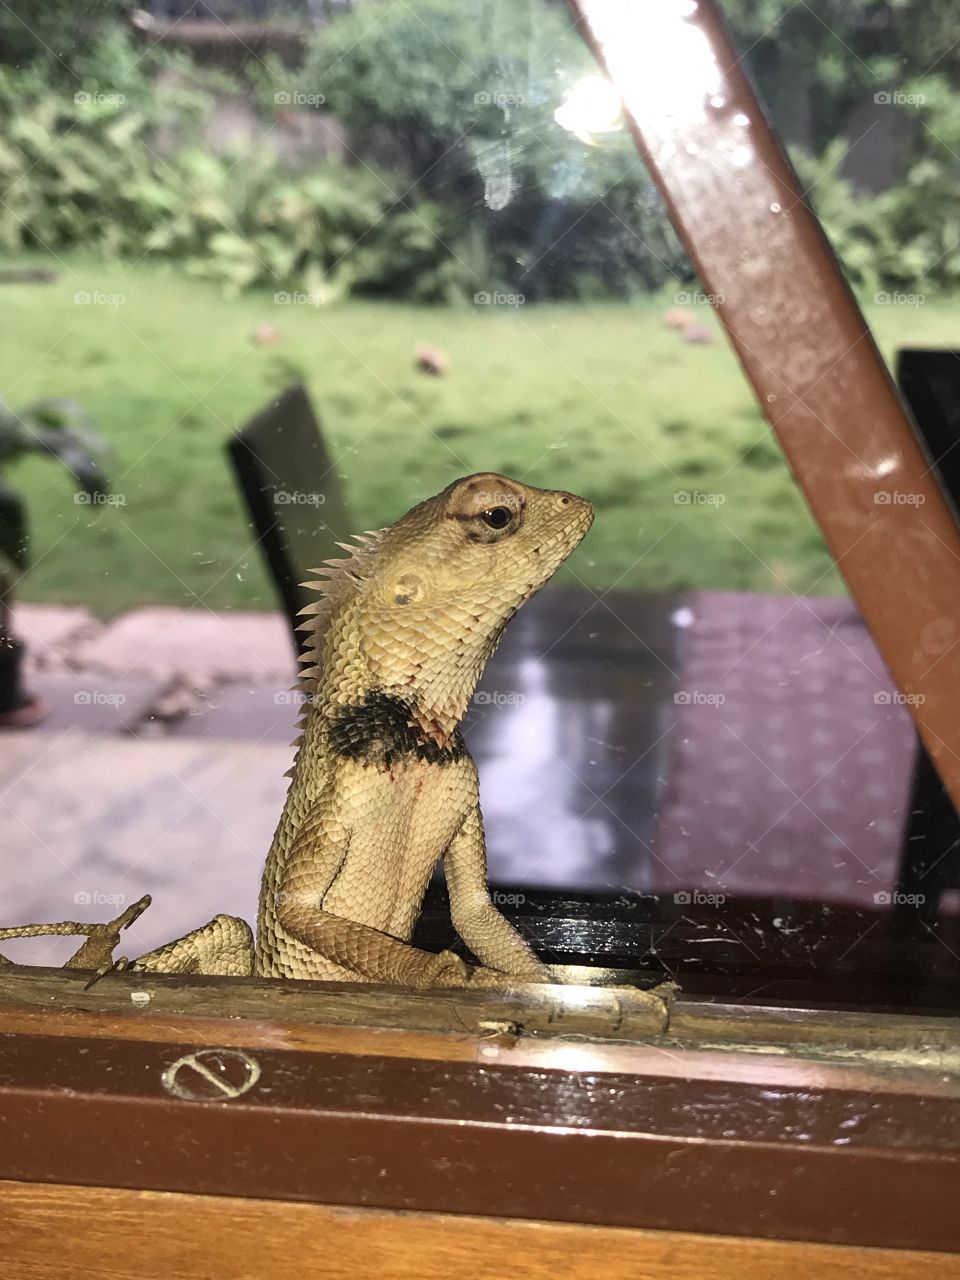 Cheeky Indian lizard having a peek from the glass doors..